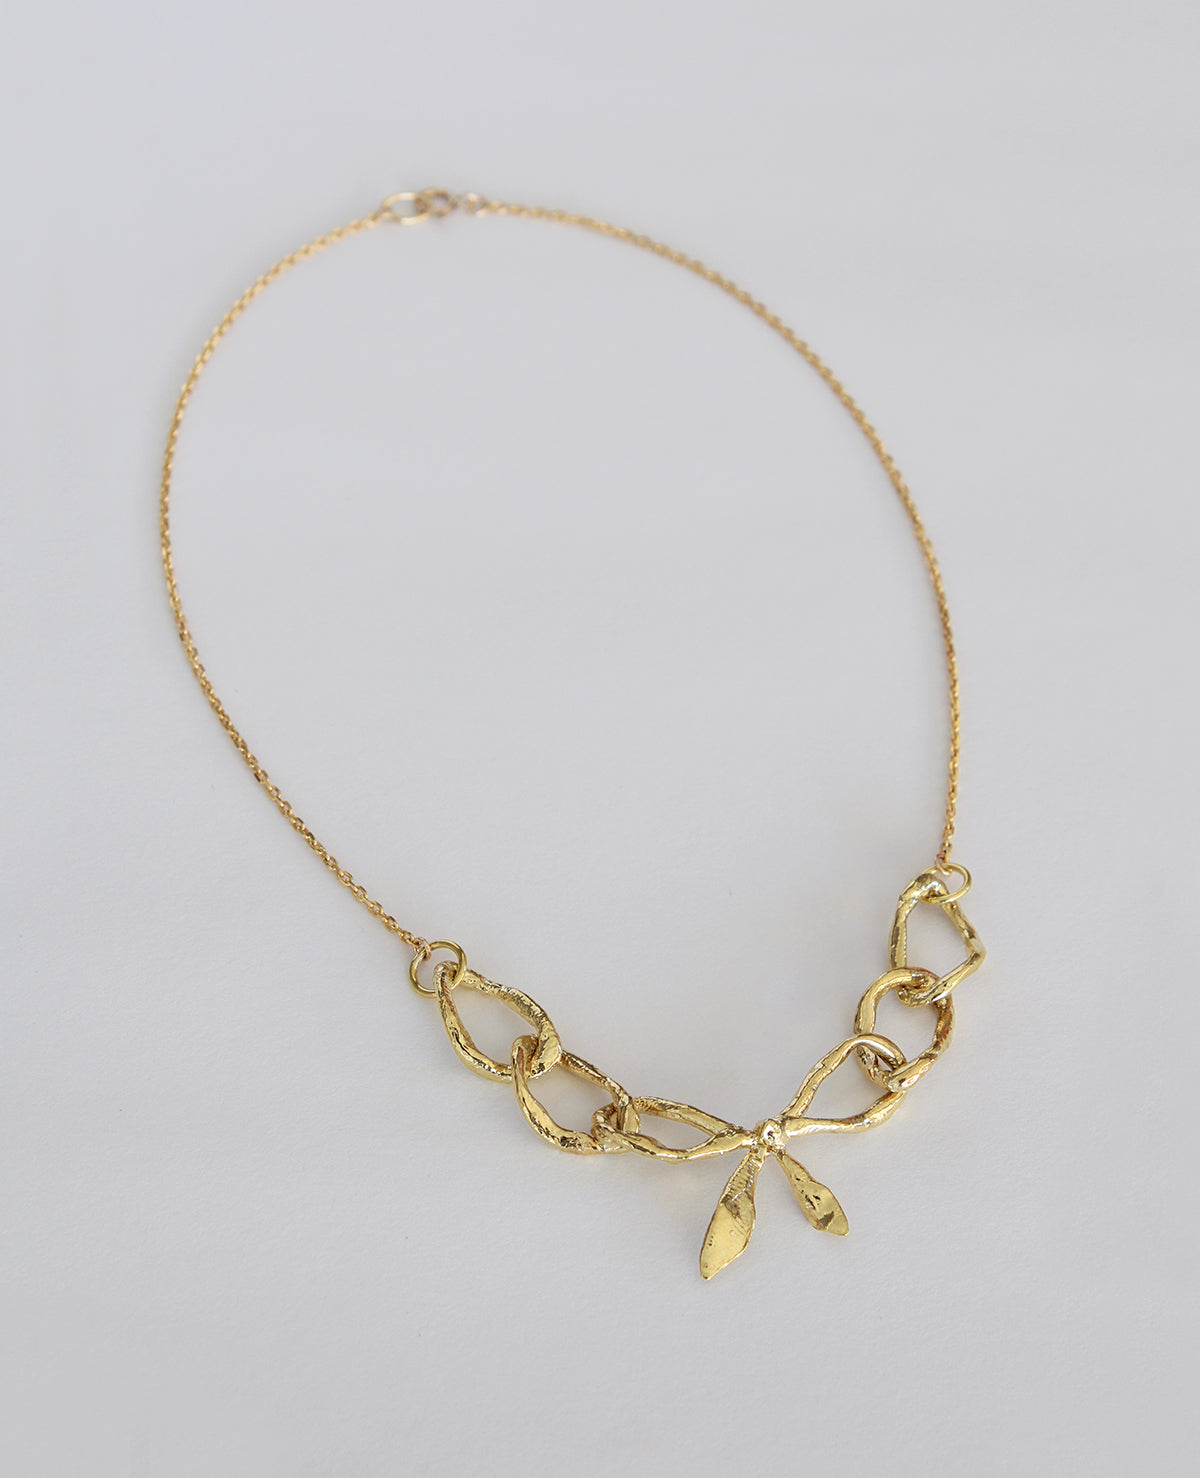 BOW REALIS // golden necklace - ORA-C jewelry - handmade jewelry by Montreal based independent designer Caroline Pham